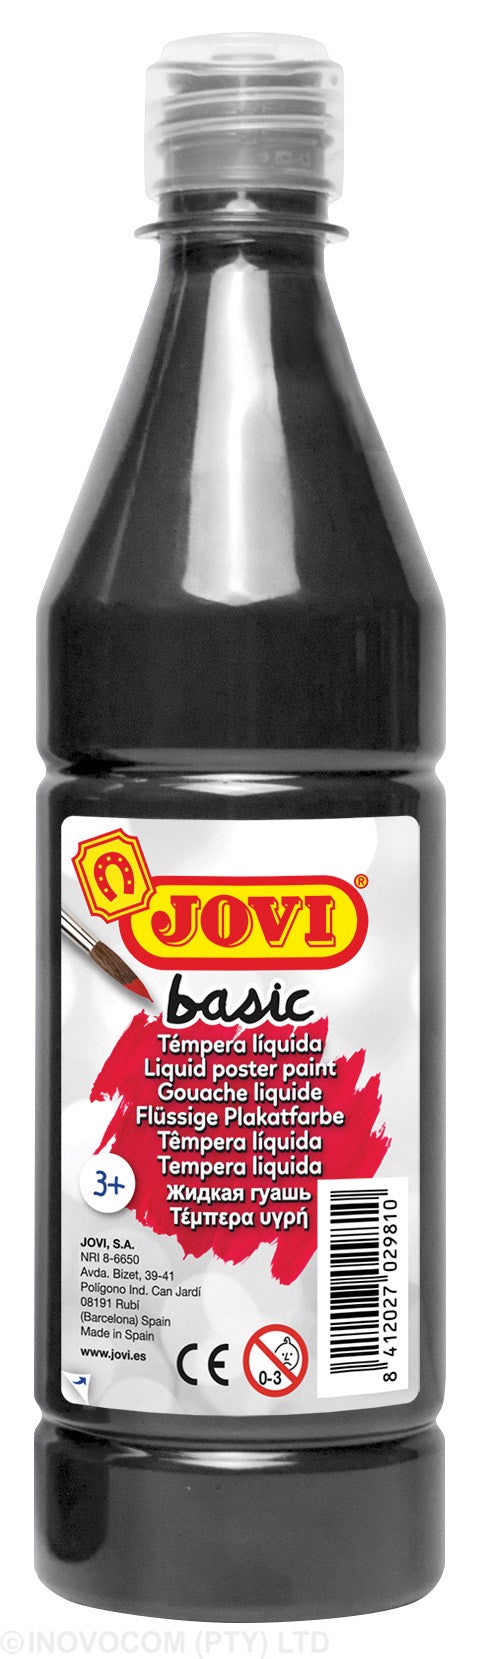 Jovi Basic Liquid Poster Paint Bottle 500ml Black